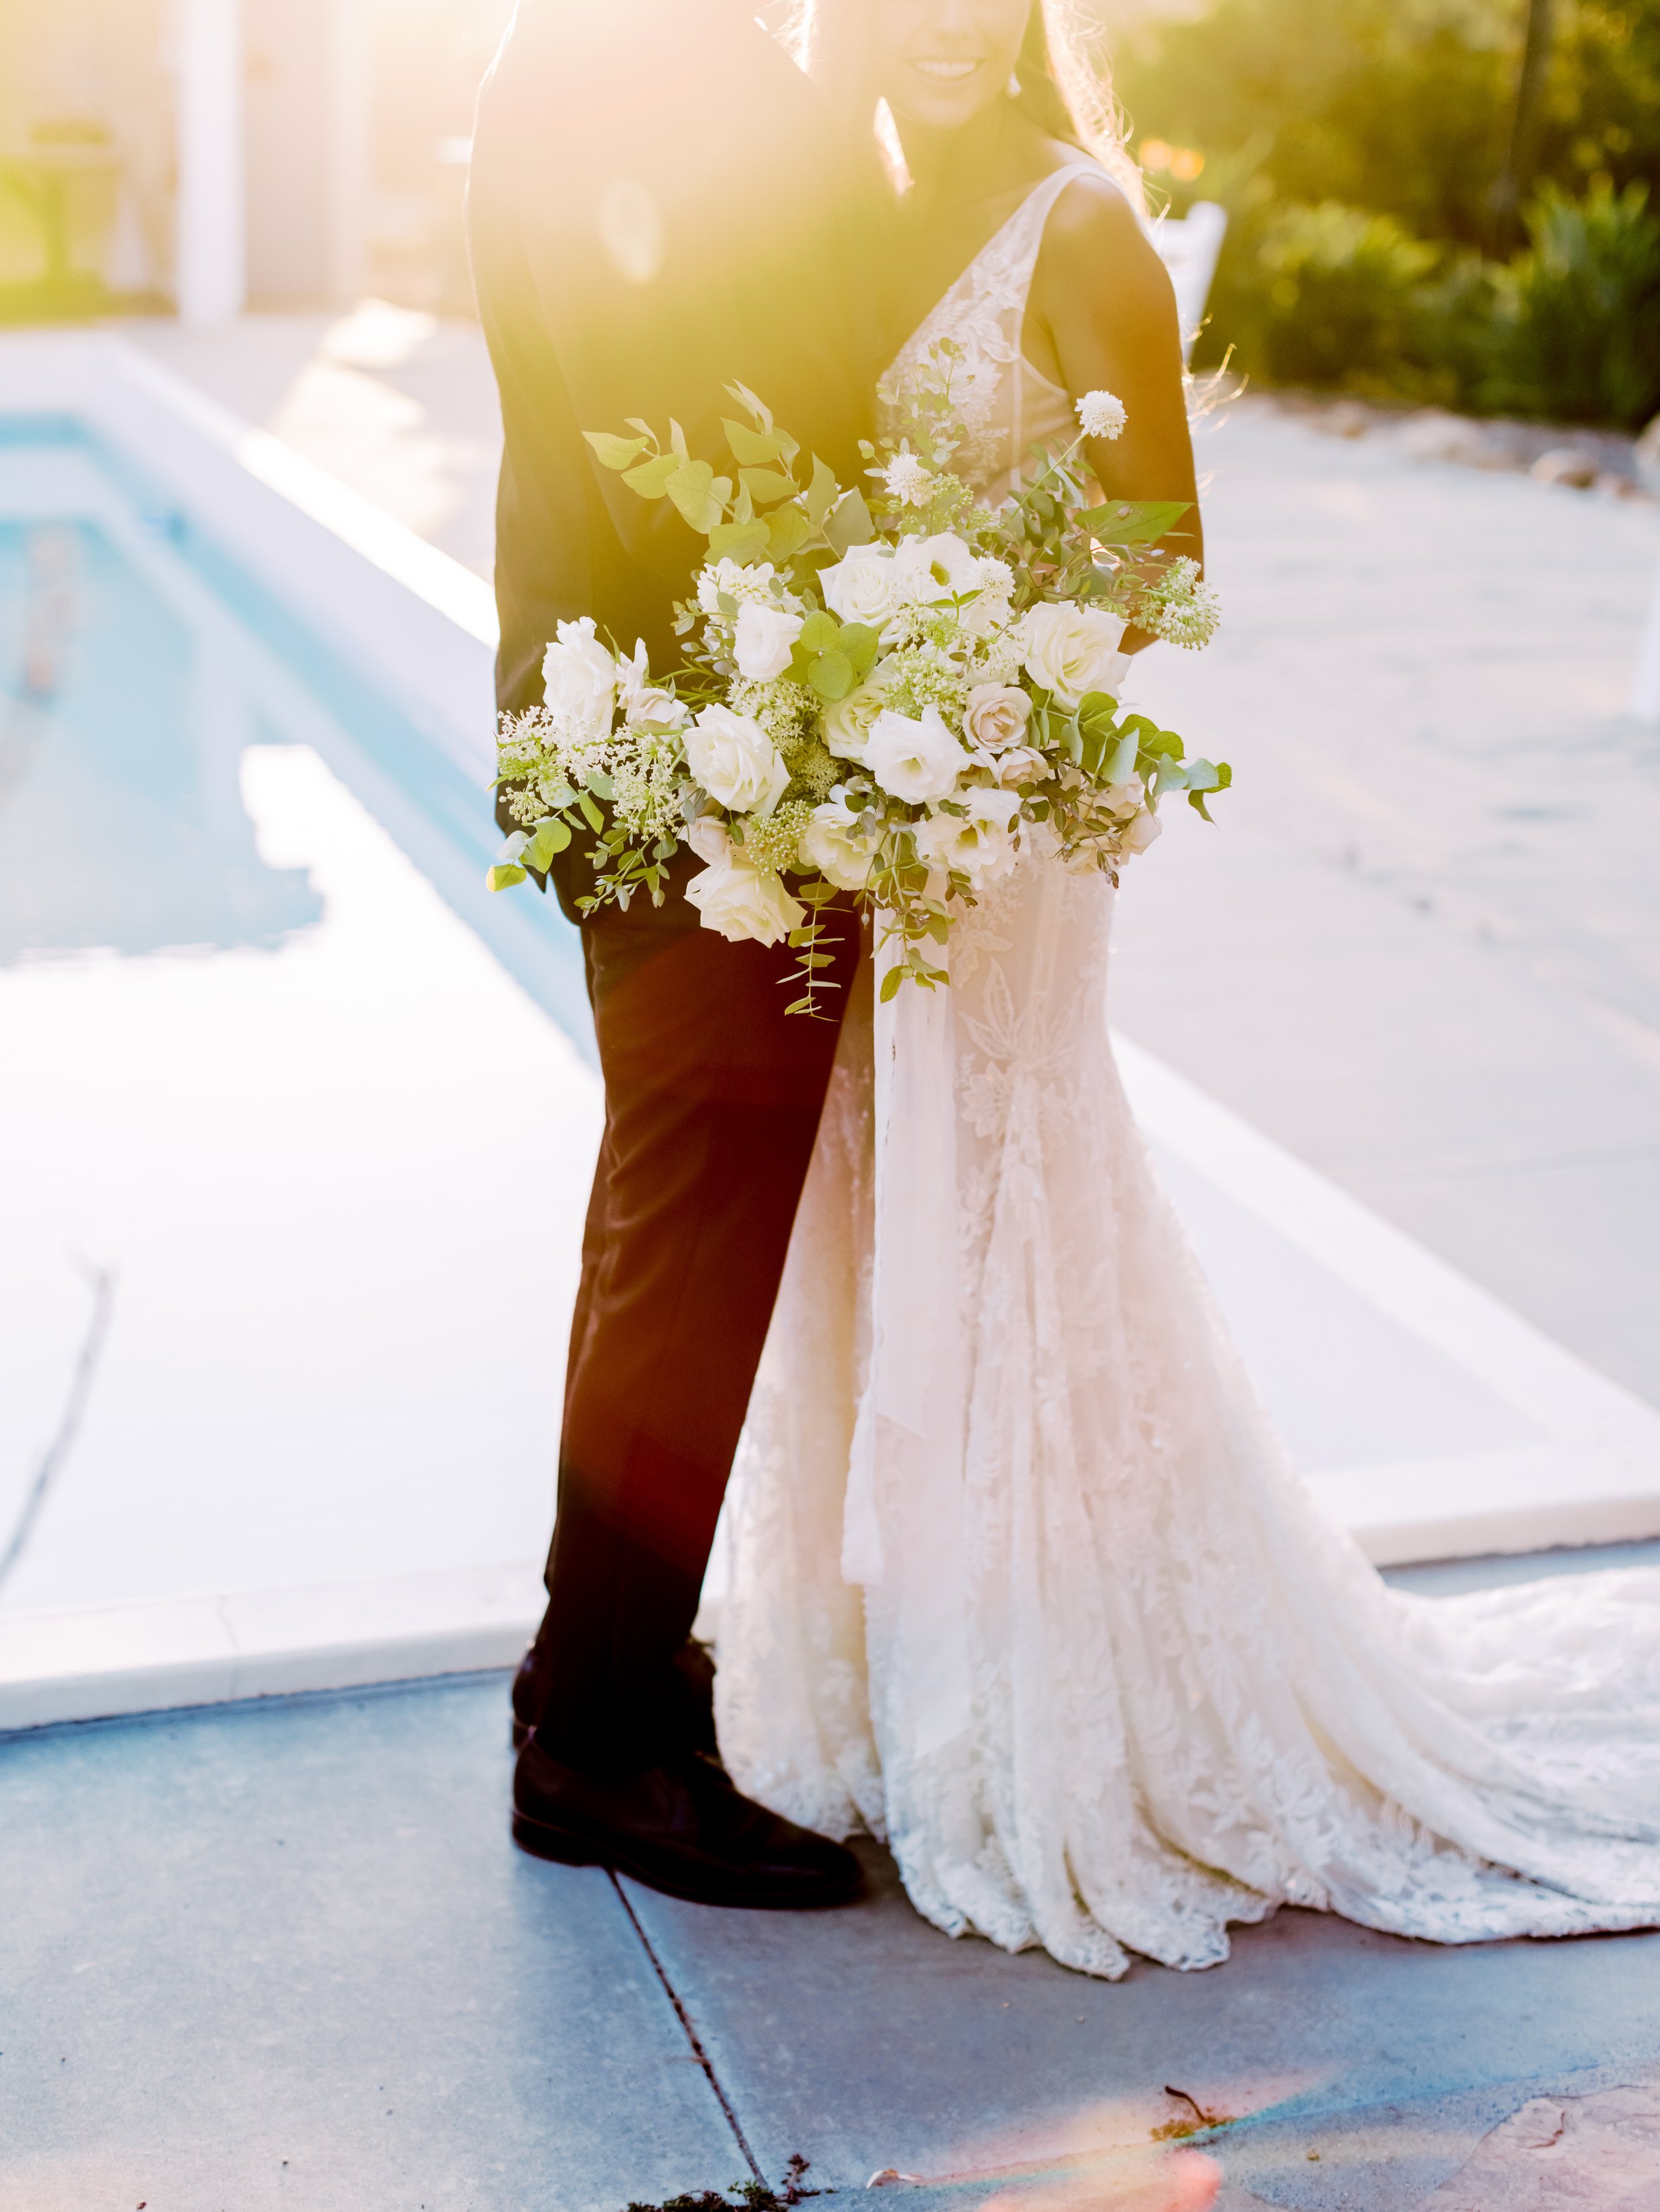 Romantics - Austin + Alexis' Wedding - Natalie Schutt Photography-113.jpg